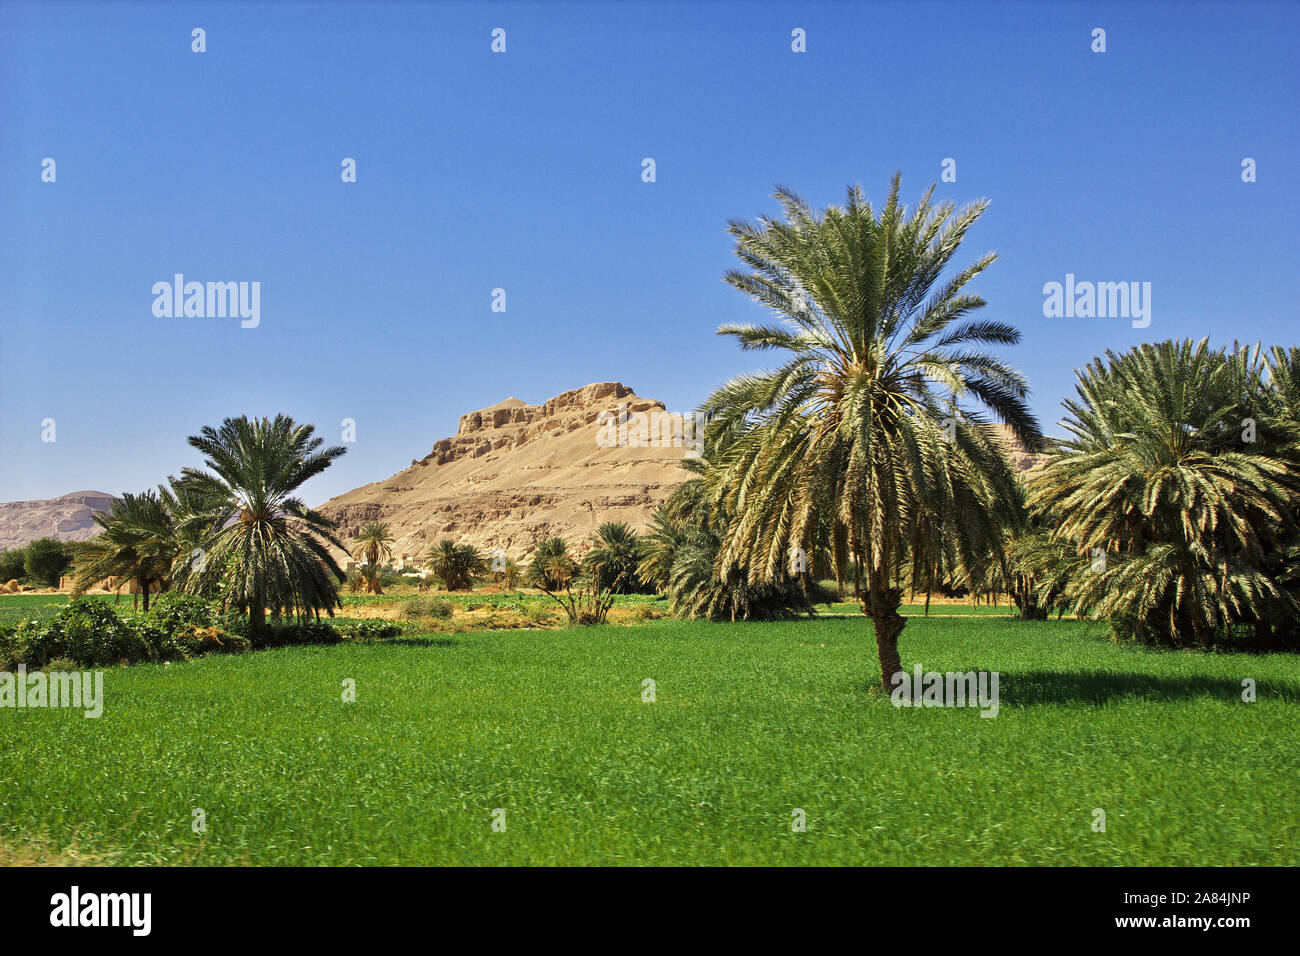 The landscape in mountains in Wadi Hadhramaut, Yemen Stock Photo